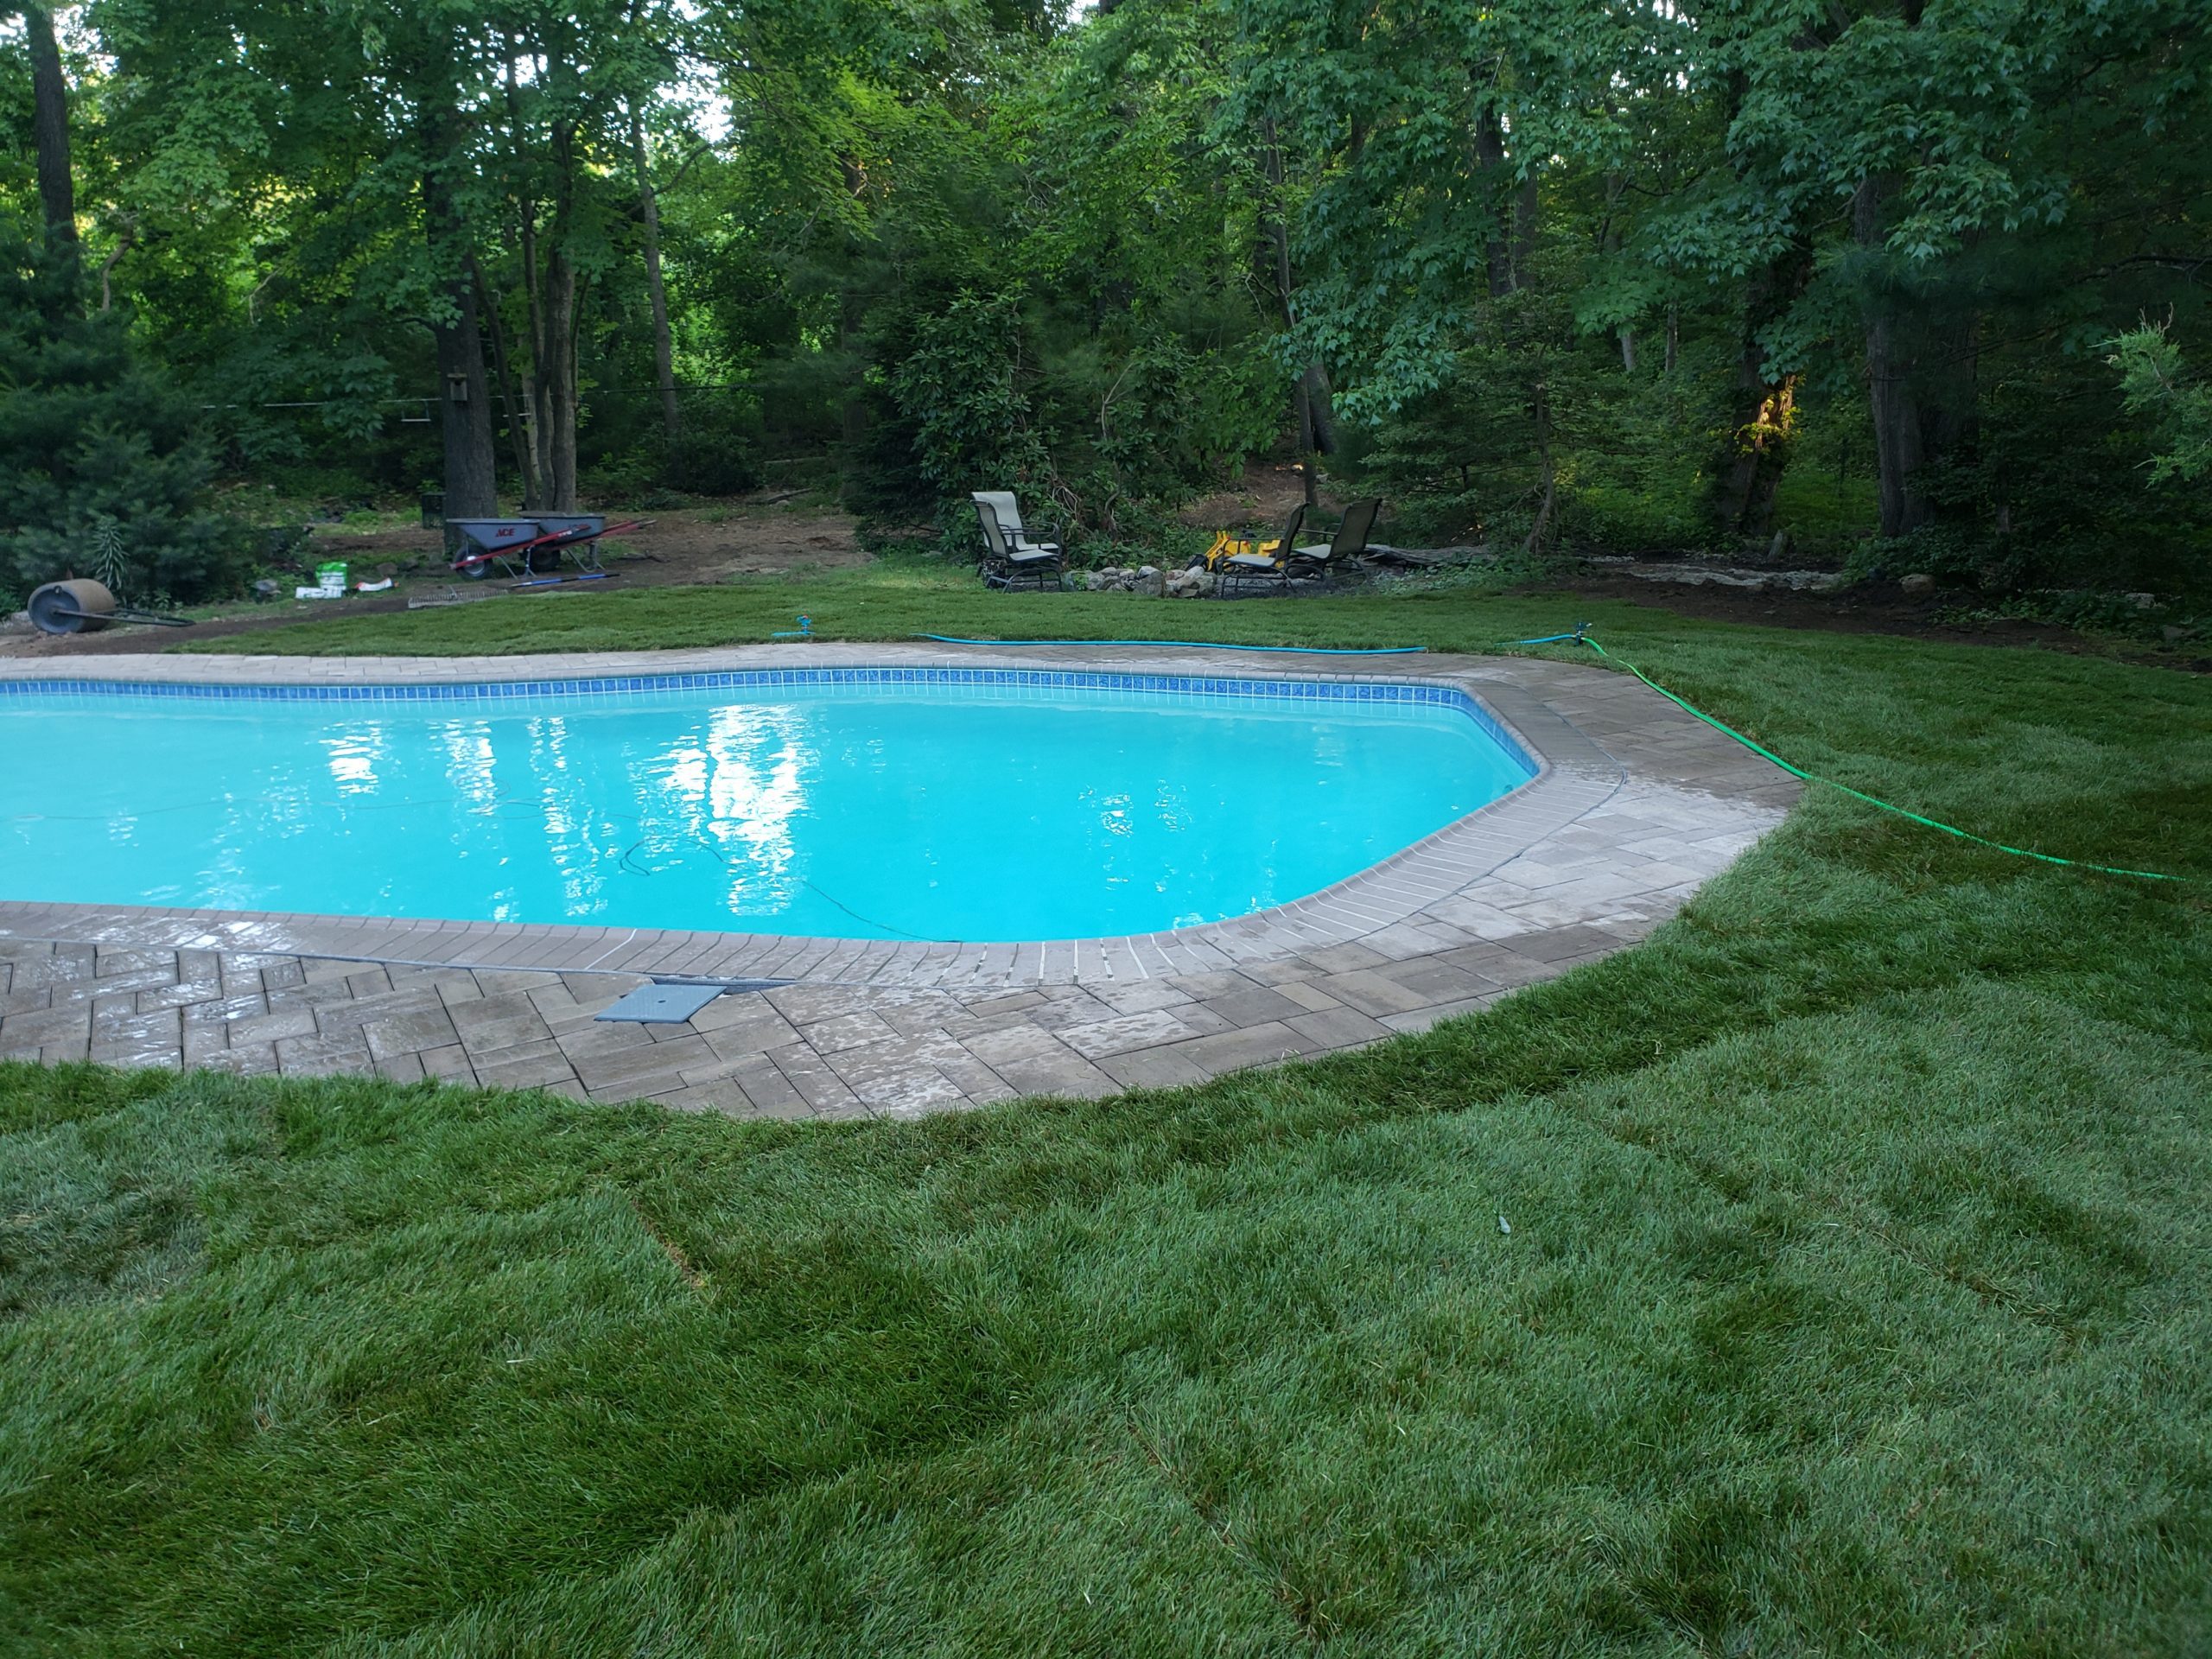 Backyard landscaping, pool landscaping massachusetts, backyard landscape design: phot of pool landscape design in a back yard | landscaping boston braintree weymouth hingham ma